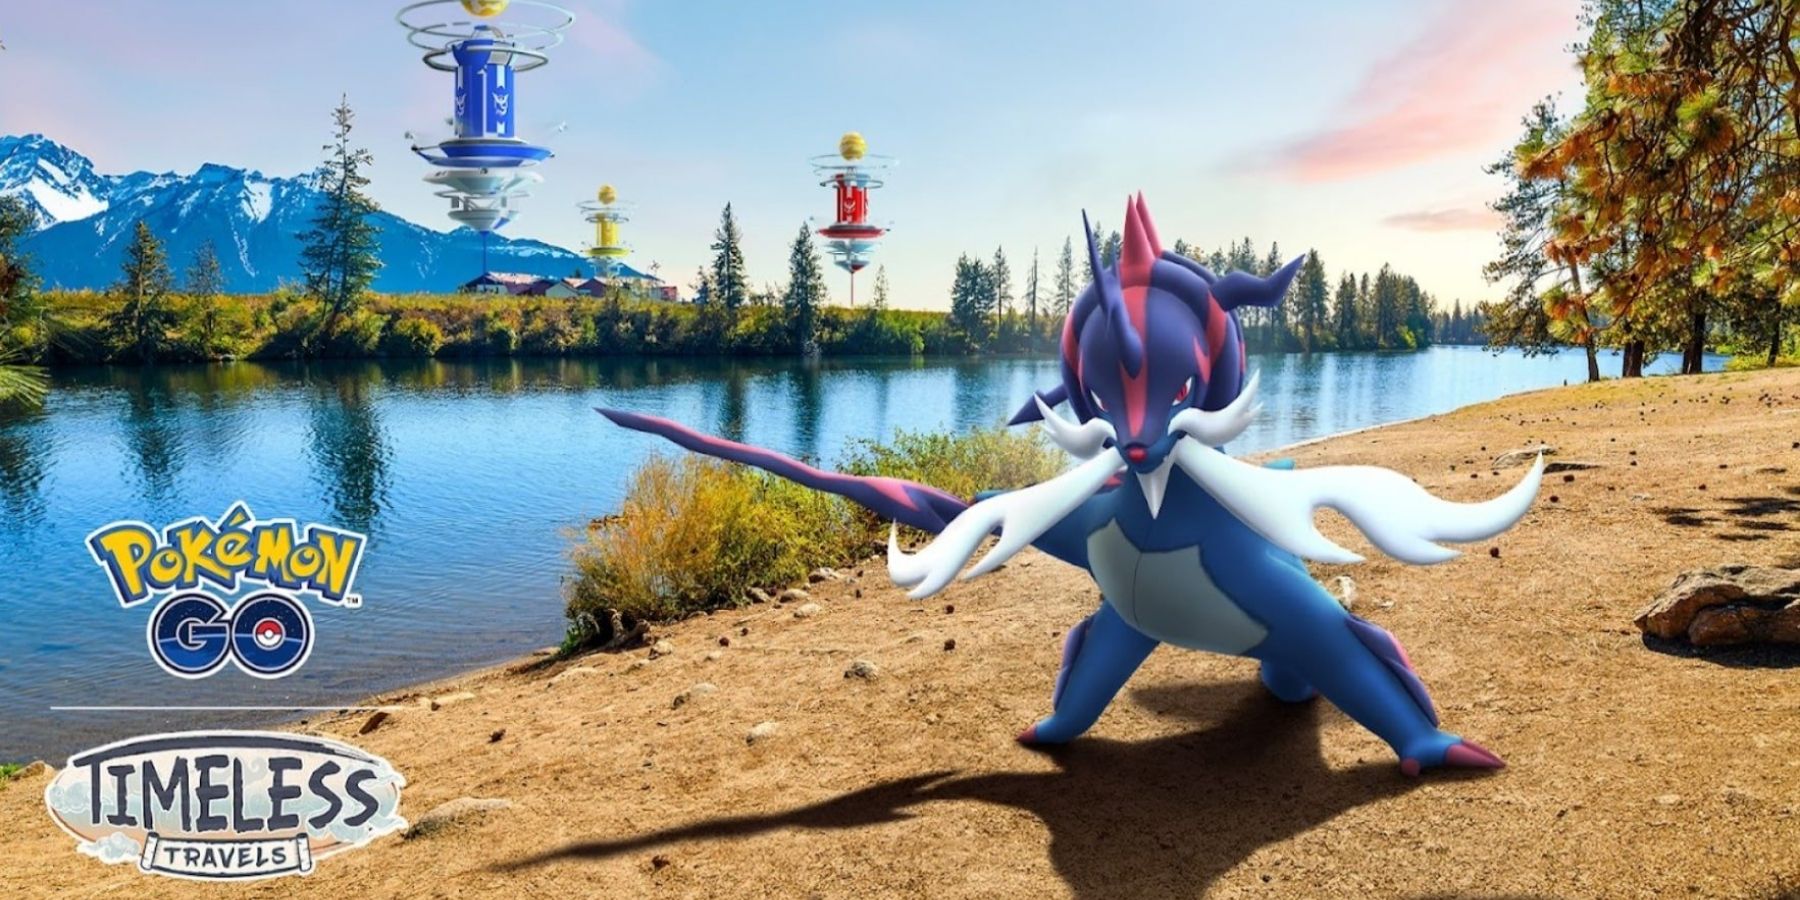 Pokémon GO introduces a new season of Adventures Abound, with new